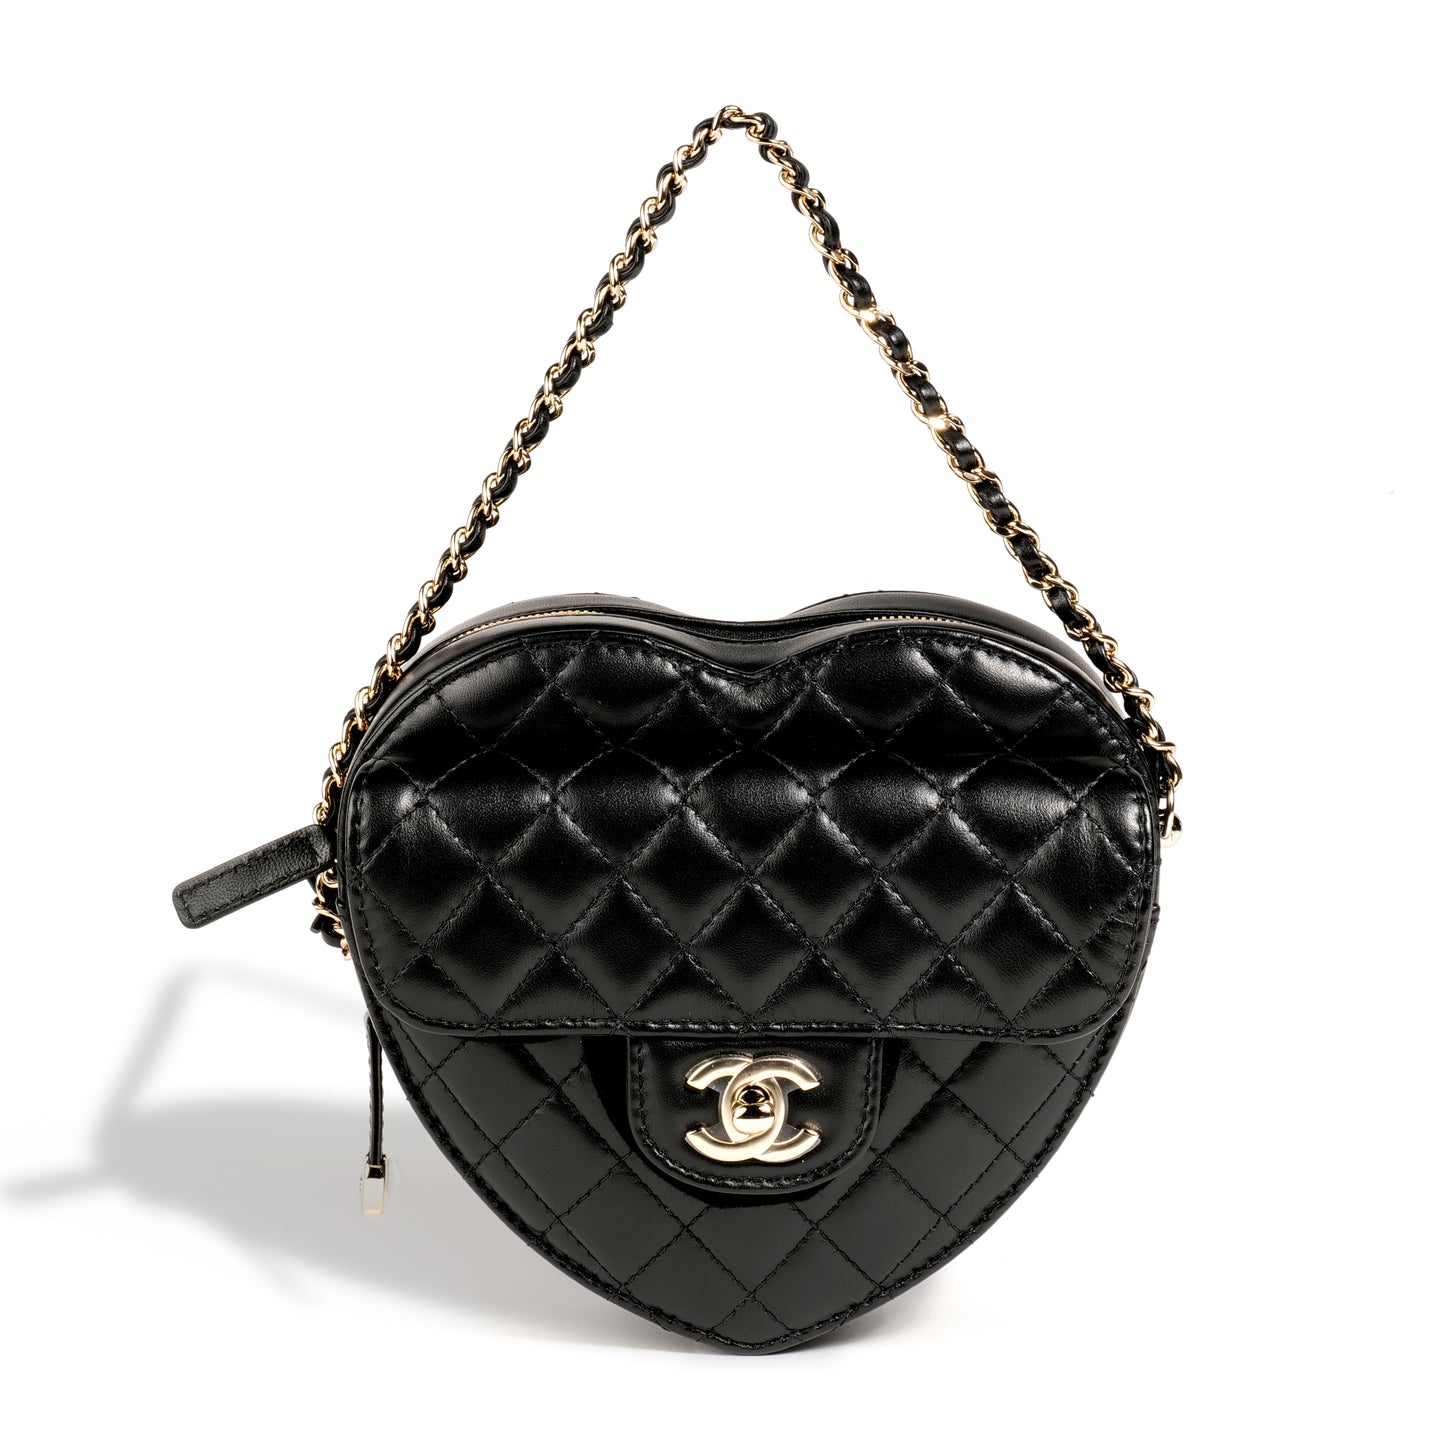 Chanel Heart Bag, Large, Black Lambskin Leather, Gold Hardware